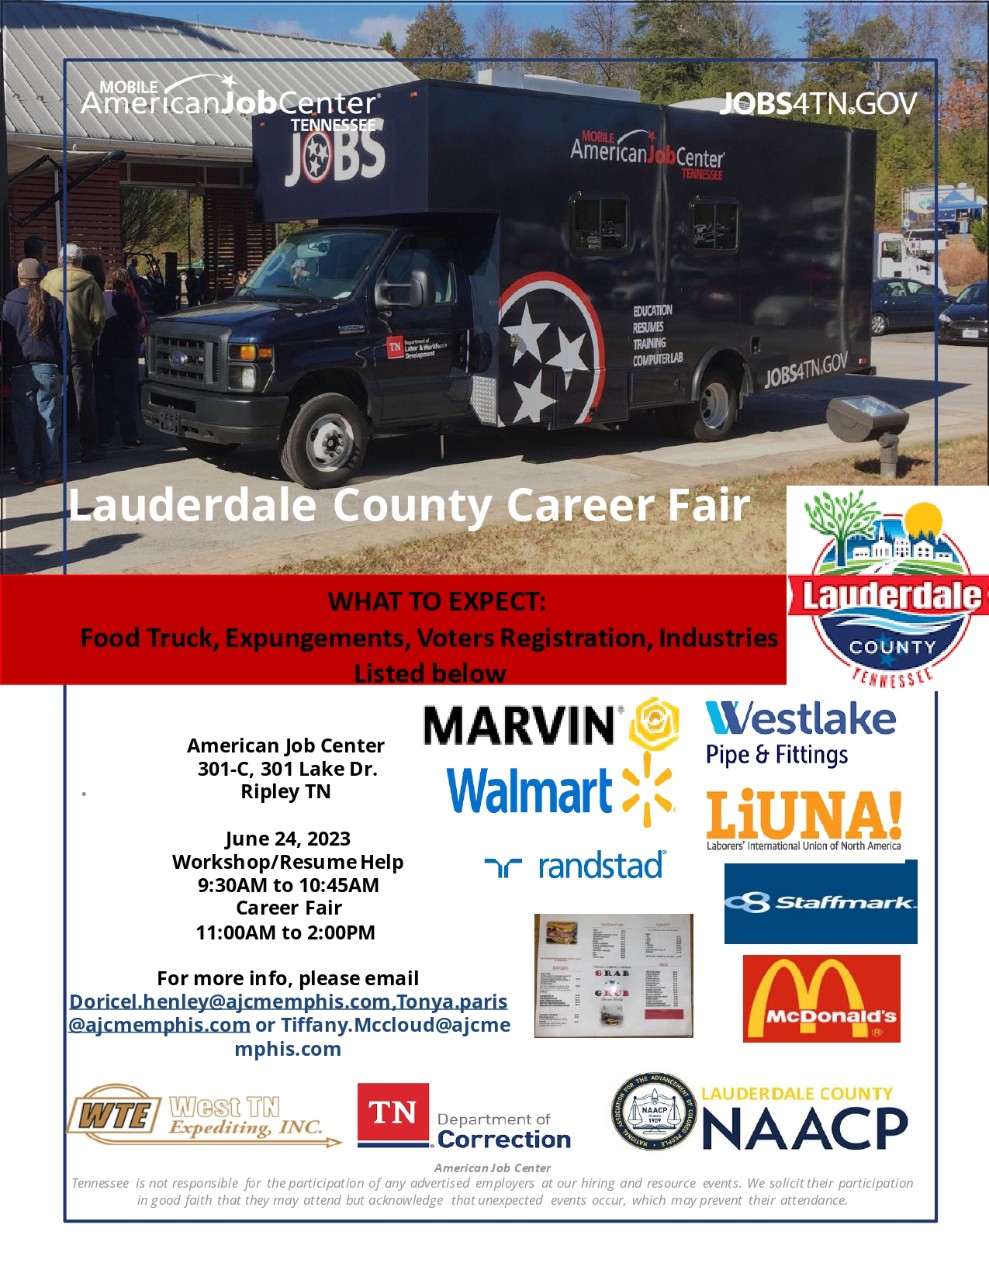 Lauderdale County Career Fair